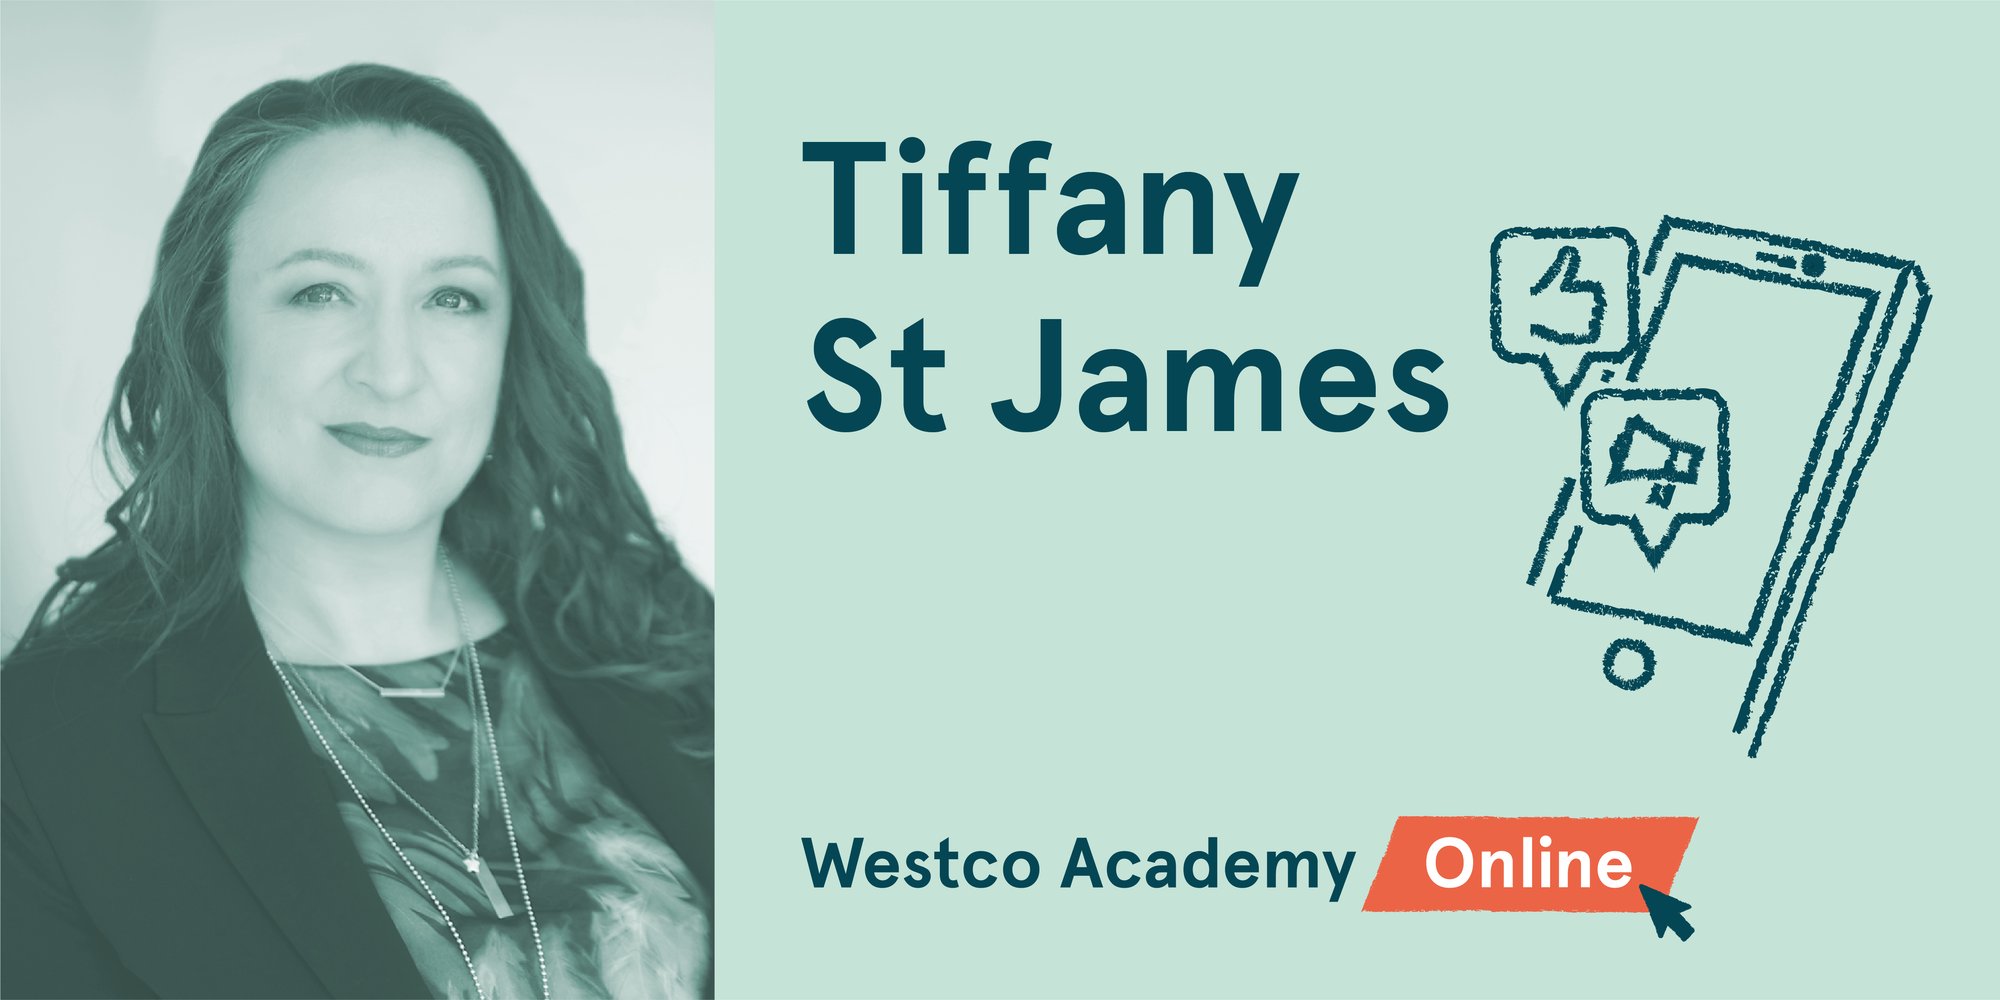 Westco Academy training course Digital and social media marketing masterclass